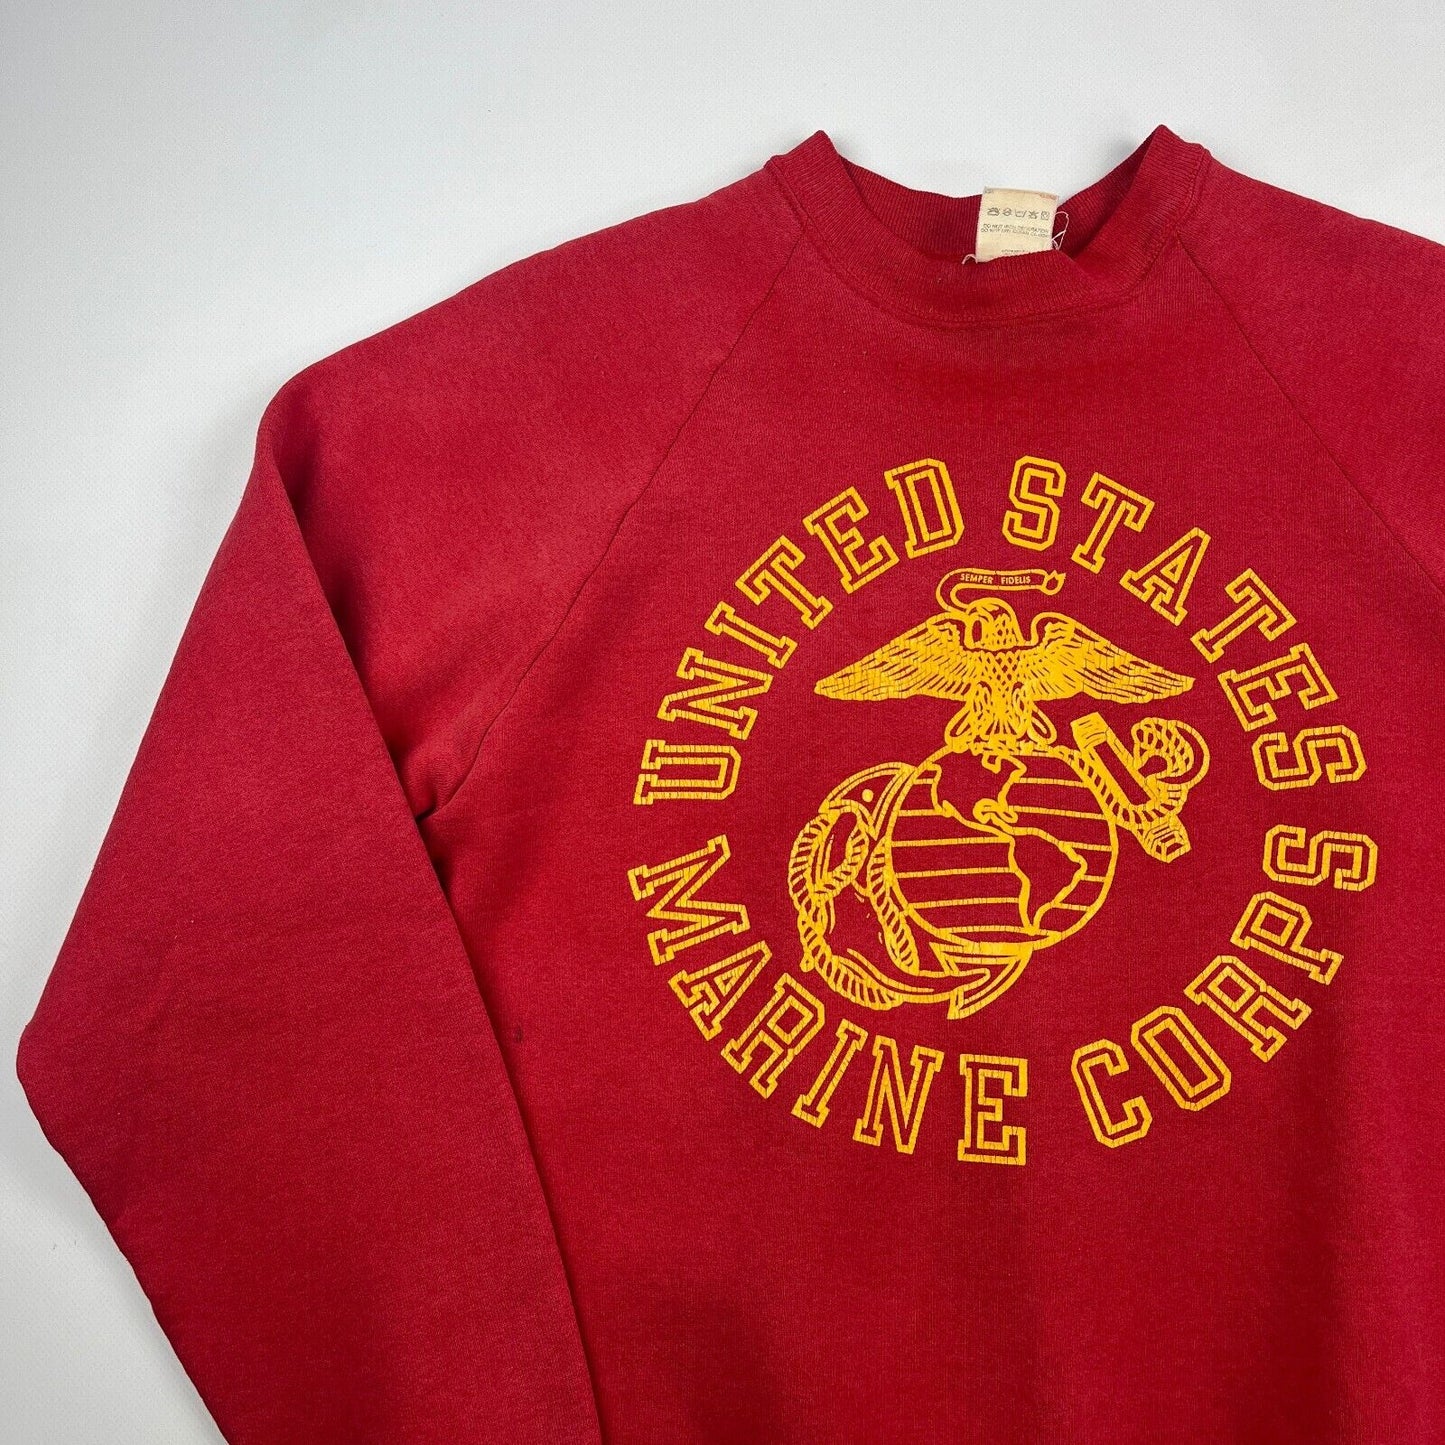 VINTAGE 90s United States Marine Corps Red Crewneck Sweater sz Medium Men